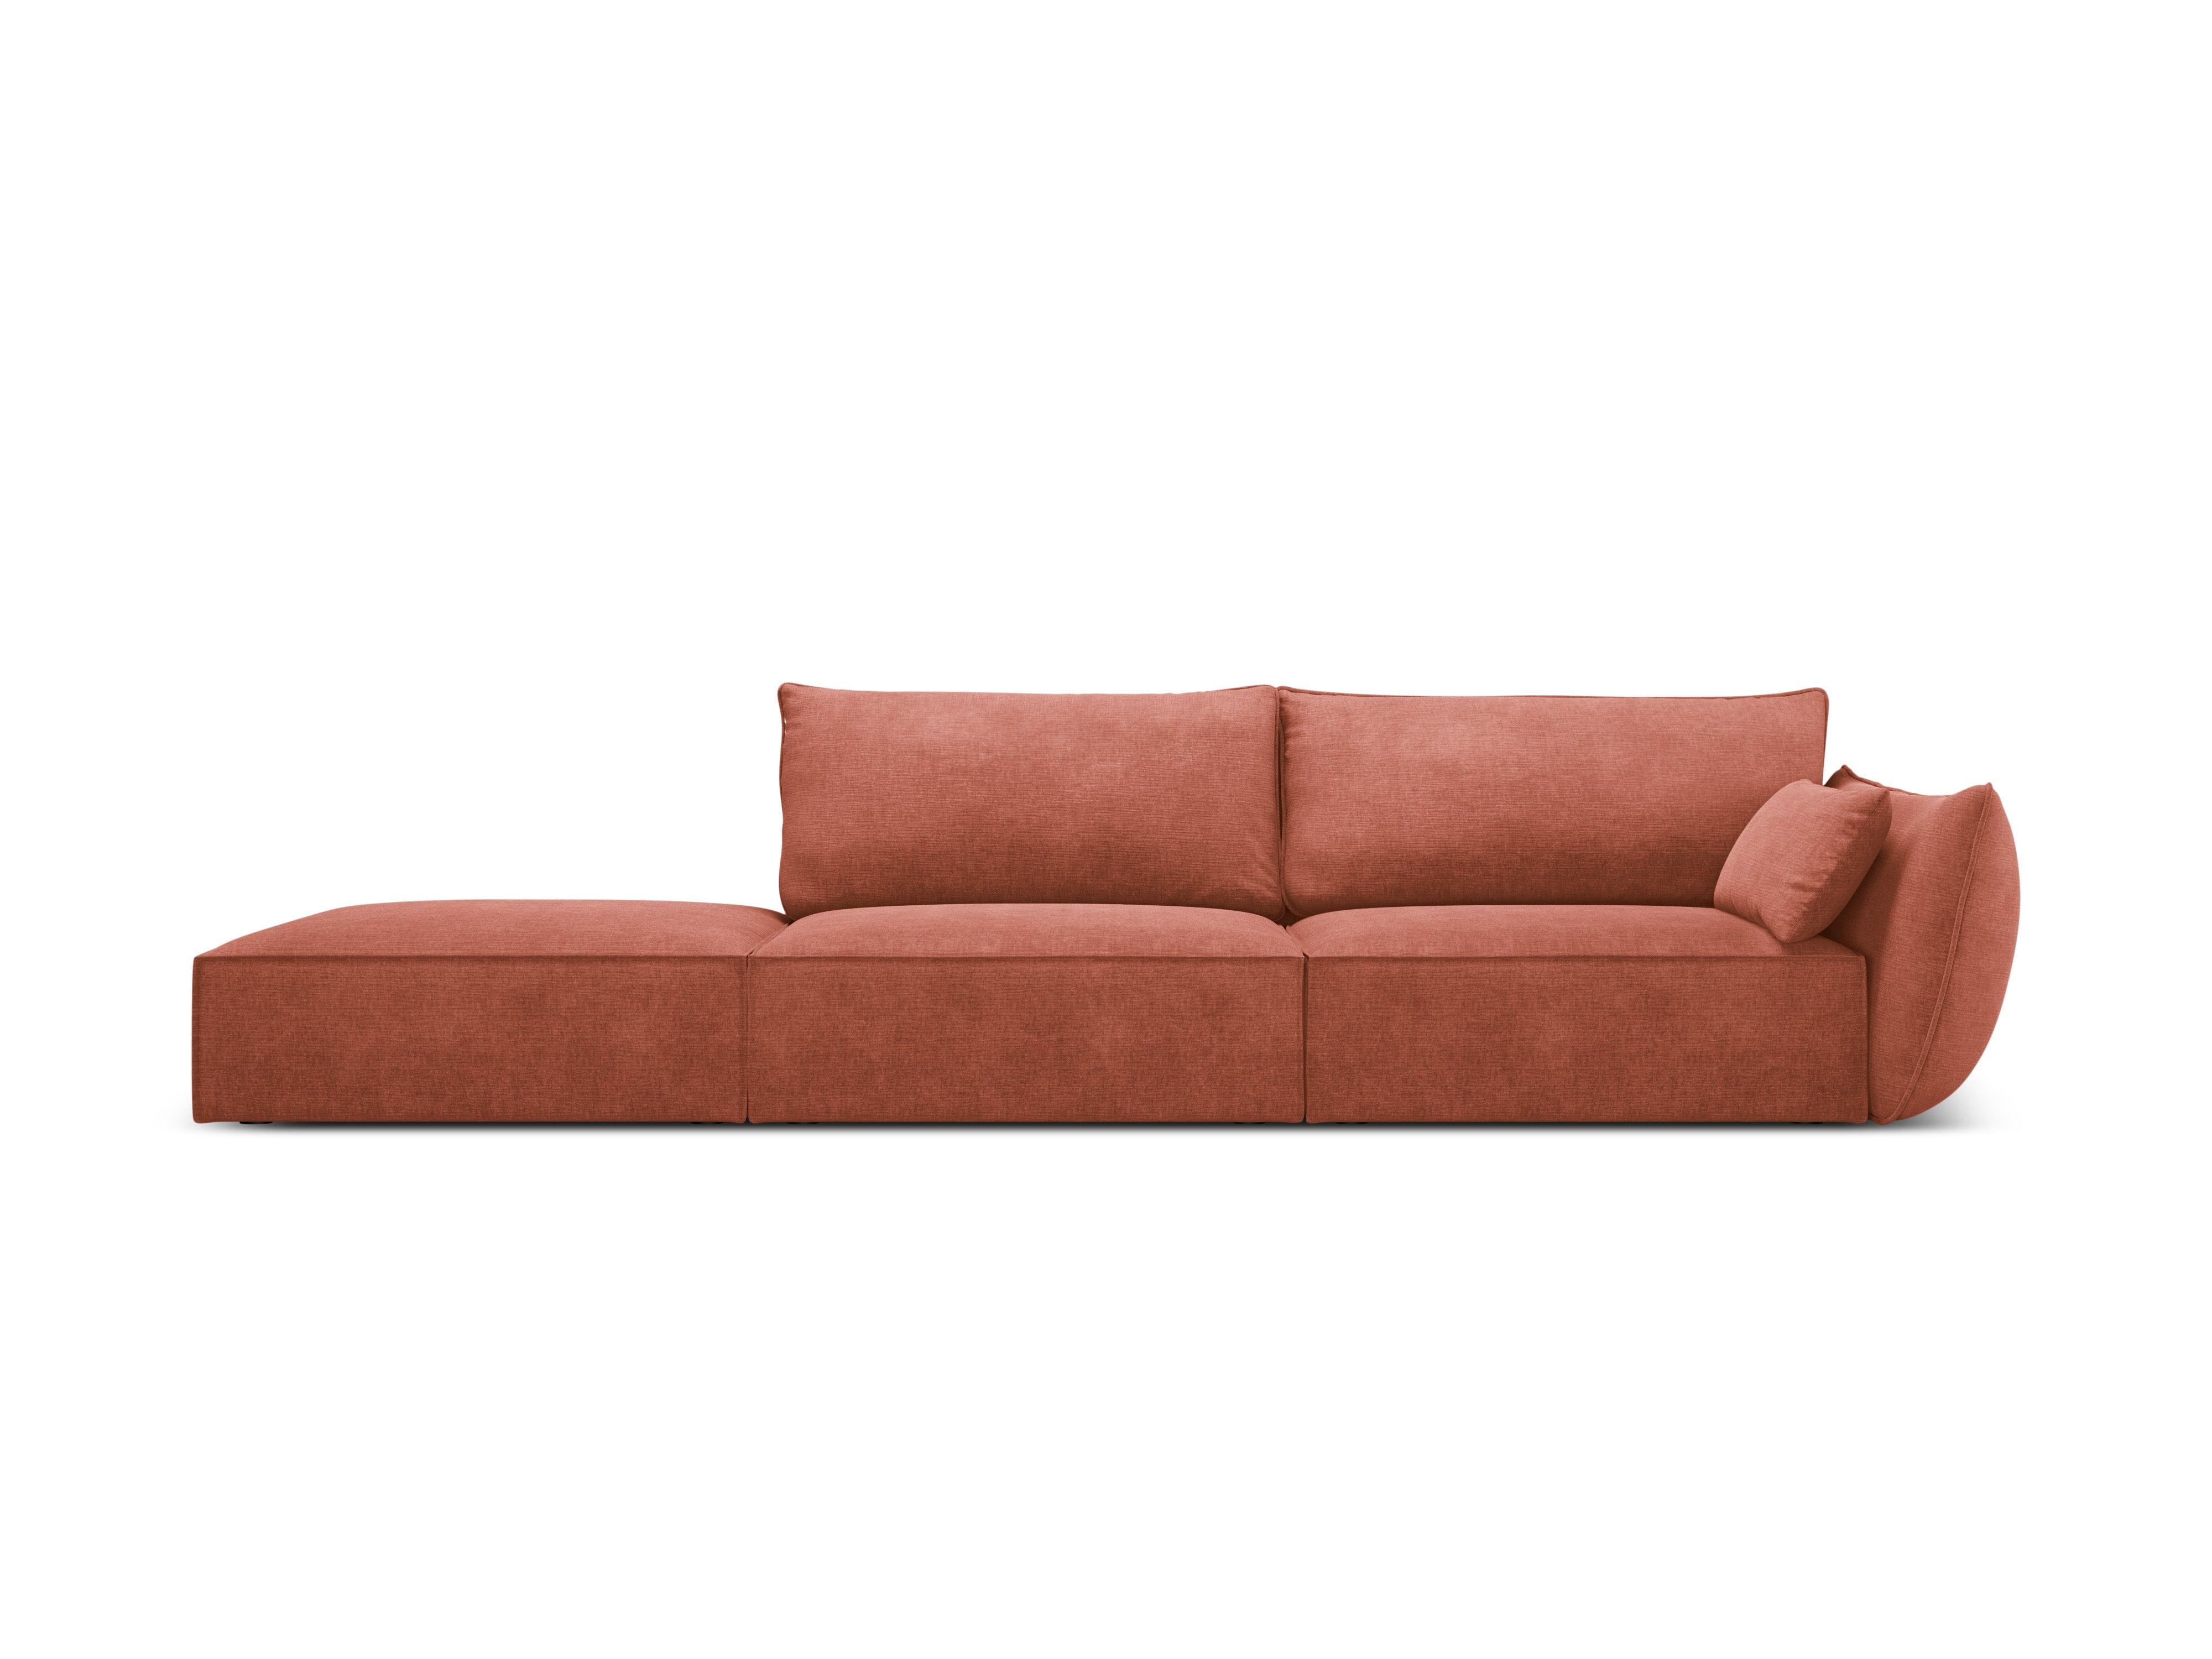 Sofa w tkaninie szenilowej lewostronna otwarta VANDA terracotta Mazzini Sofas    Eye on Design